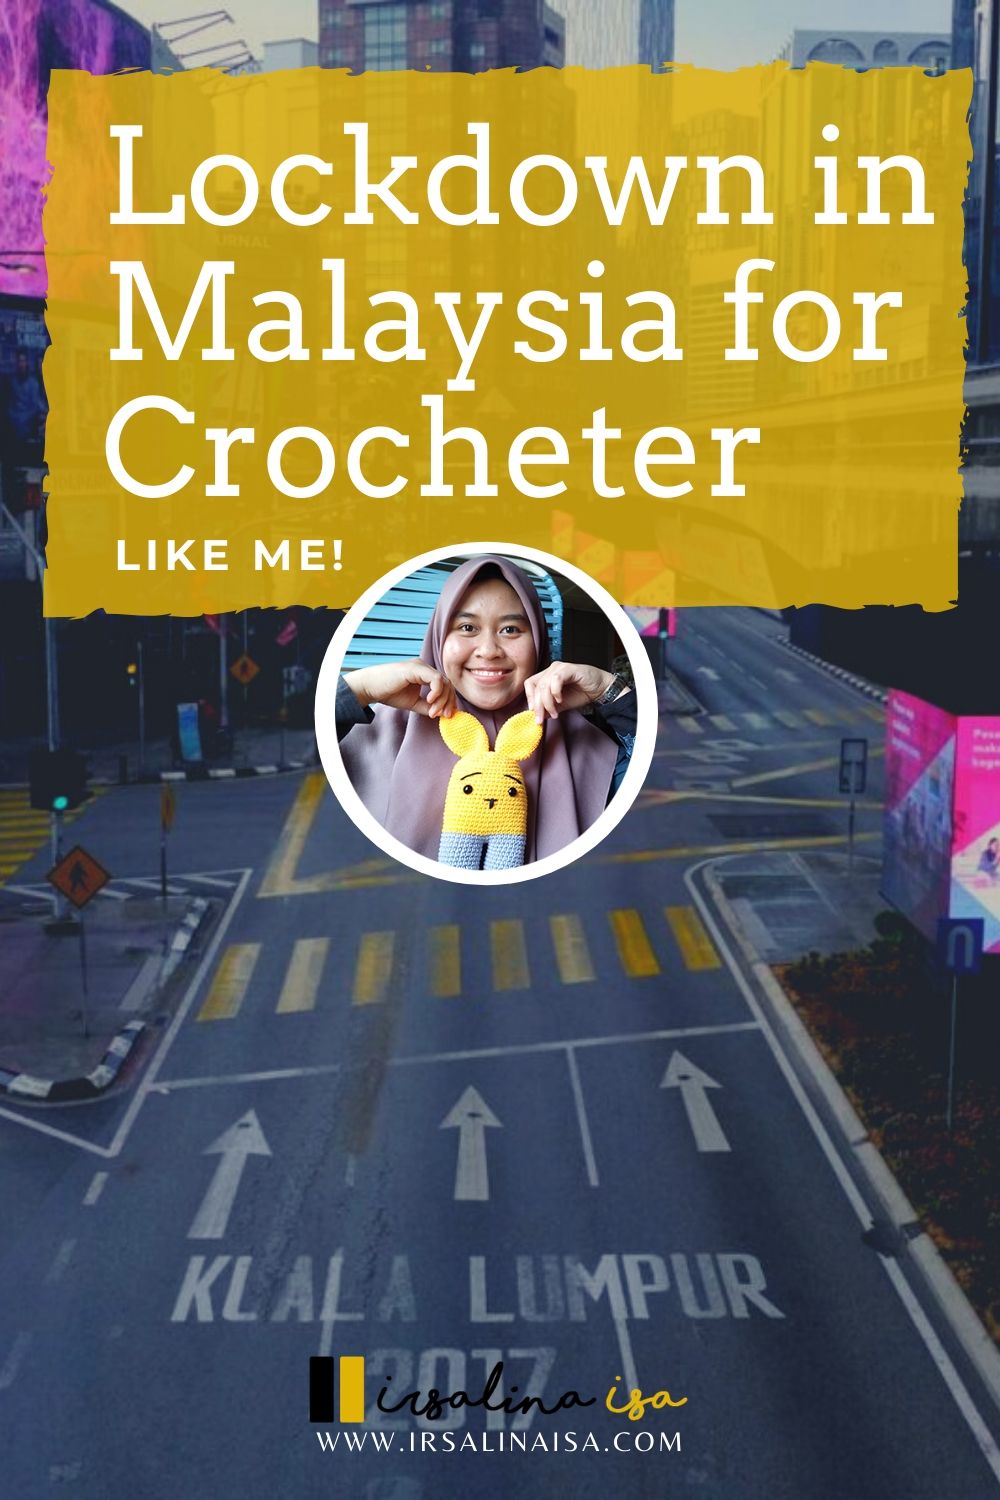 LOCKDOWN IN MALAYSIA FOR CROCHETER LIKE ME